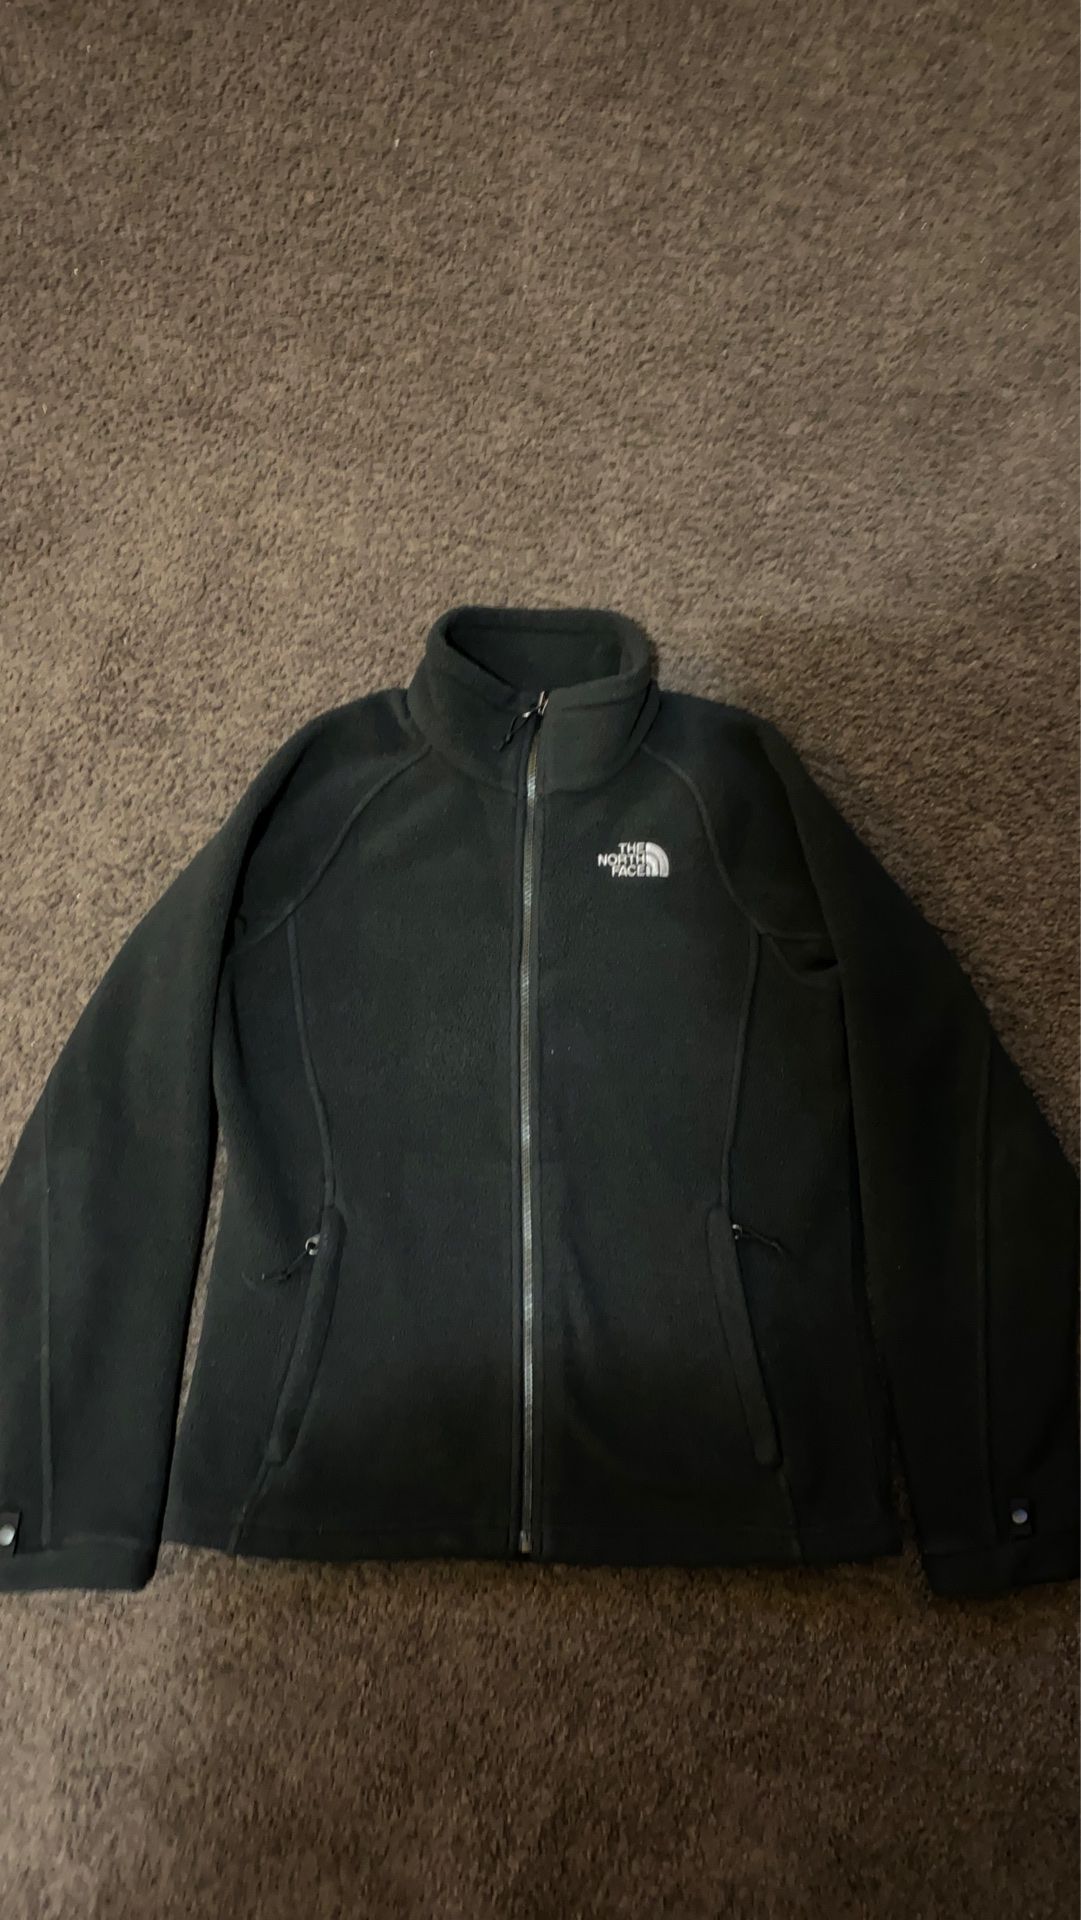 The North Face Size Women’s Medium black jacket